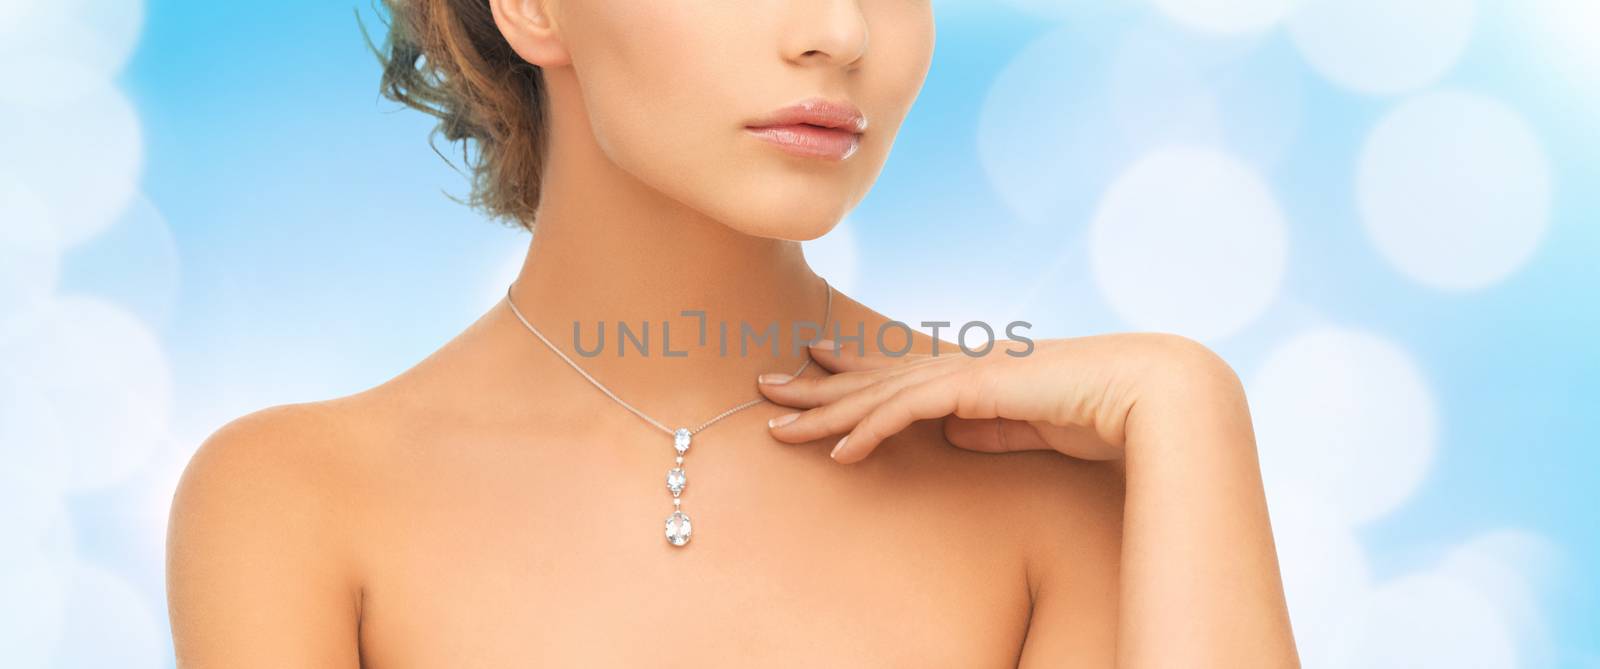 wedding, bridal, jewelry and luxury concept - beautiful woman wearing shiny diamond necklace